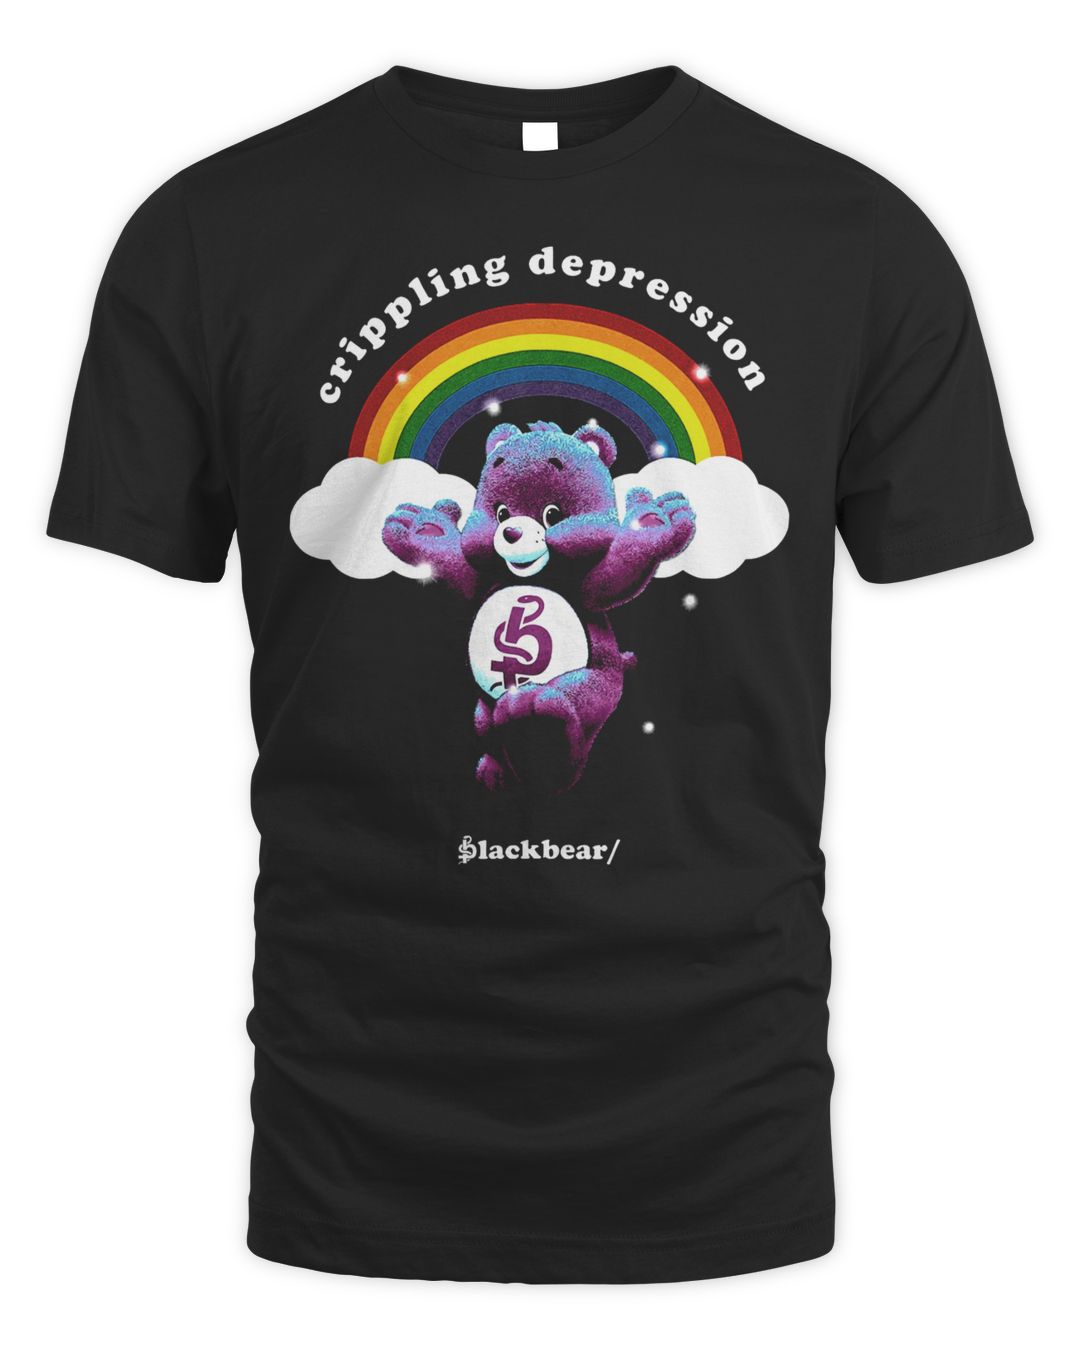 Blackbear Merch Crippling Depression Rainbow Shirt